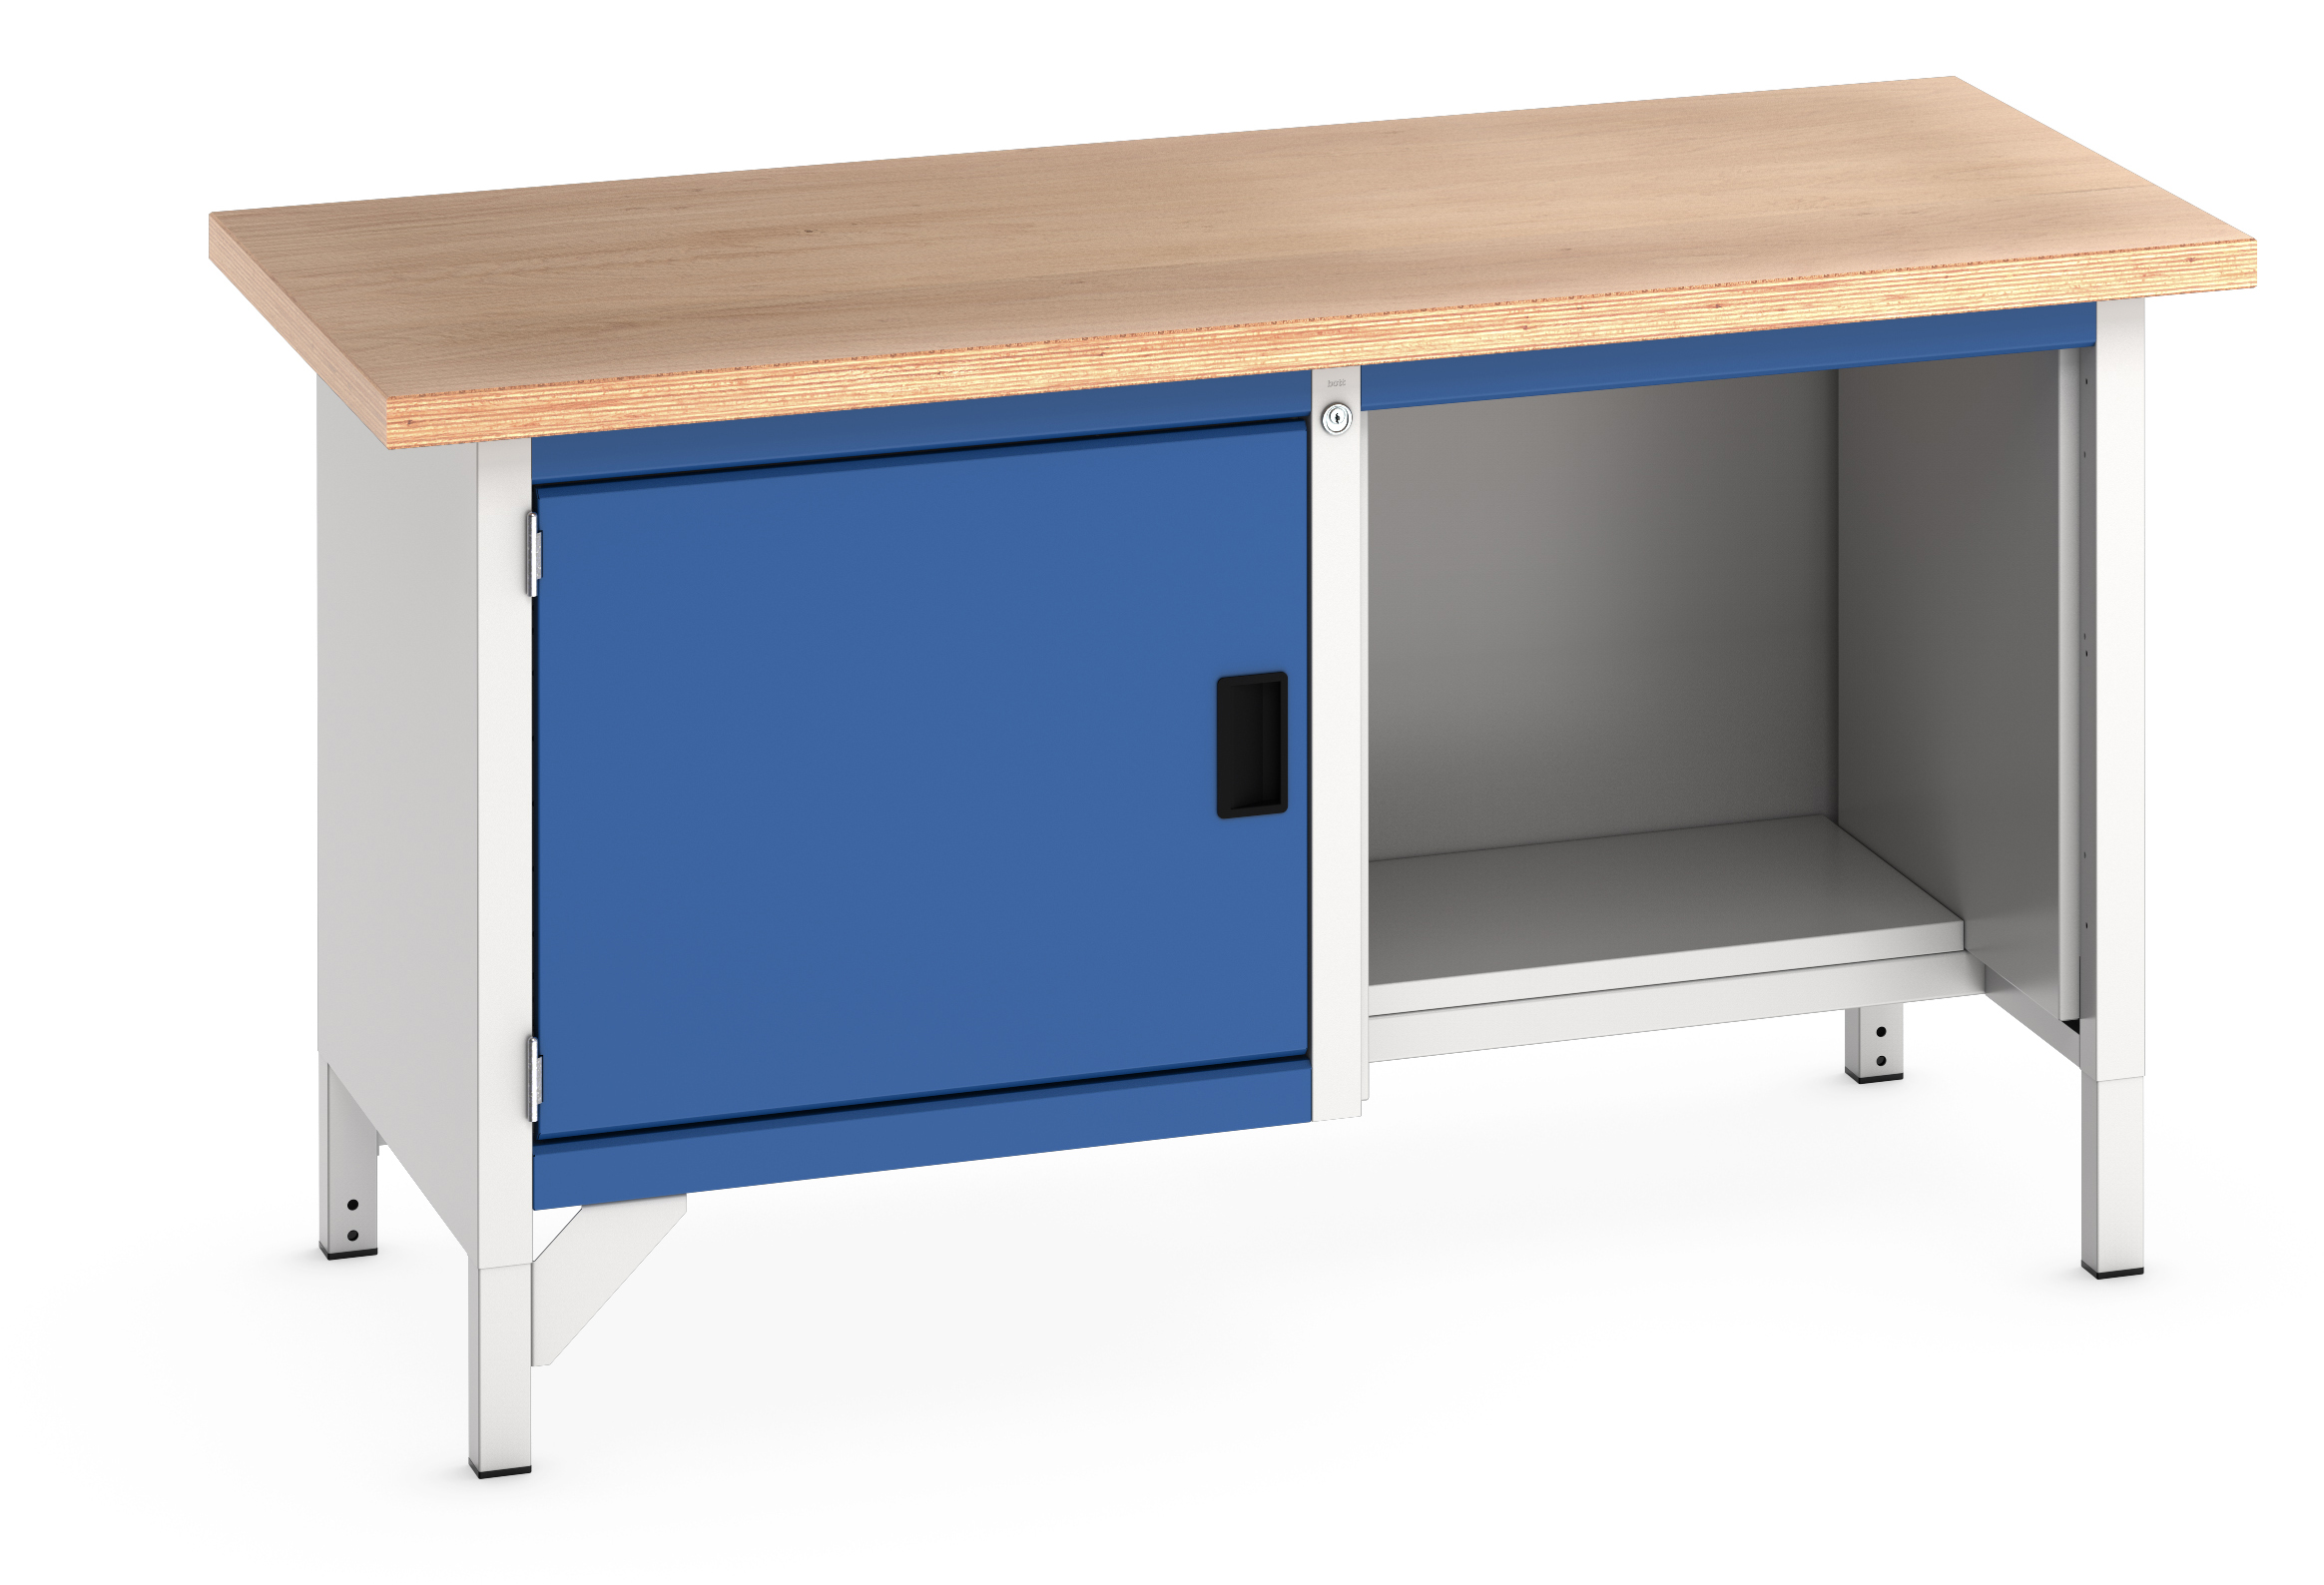 Bott Cubio Storage Bench With Full Cupboard / Open With Half Depth Base Shelf - 41002034.11V